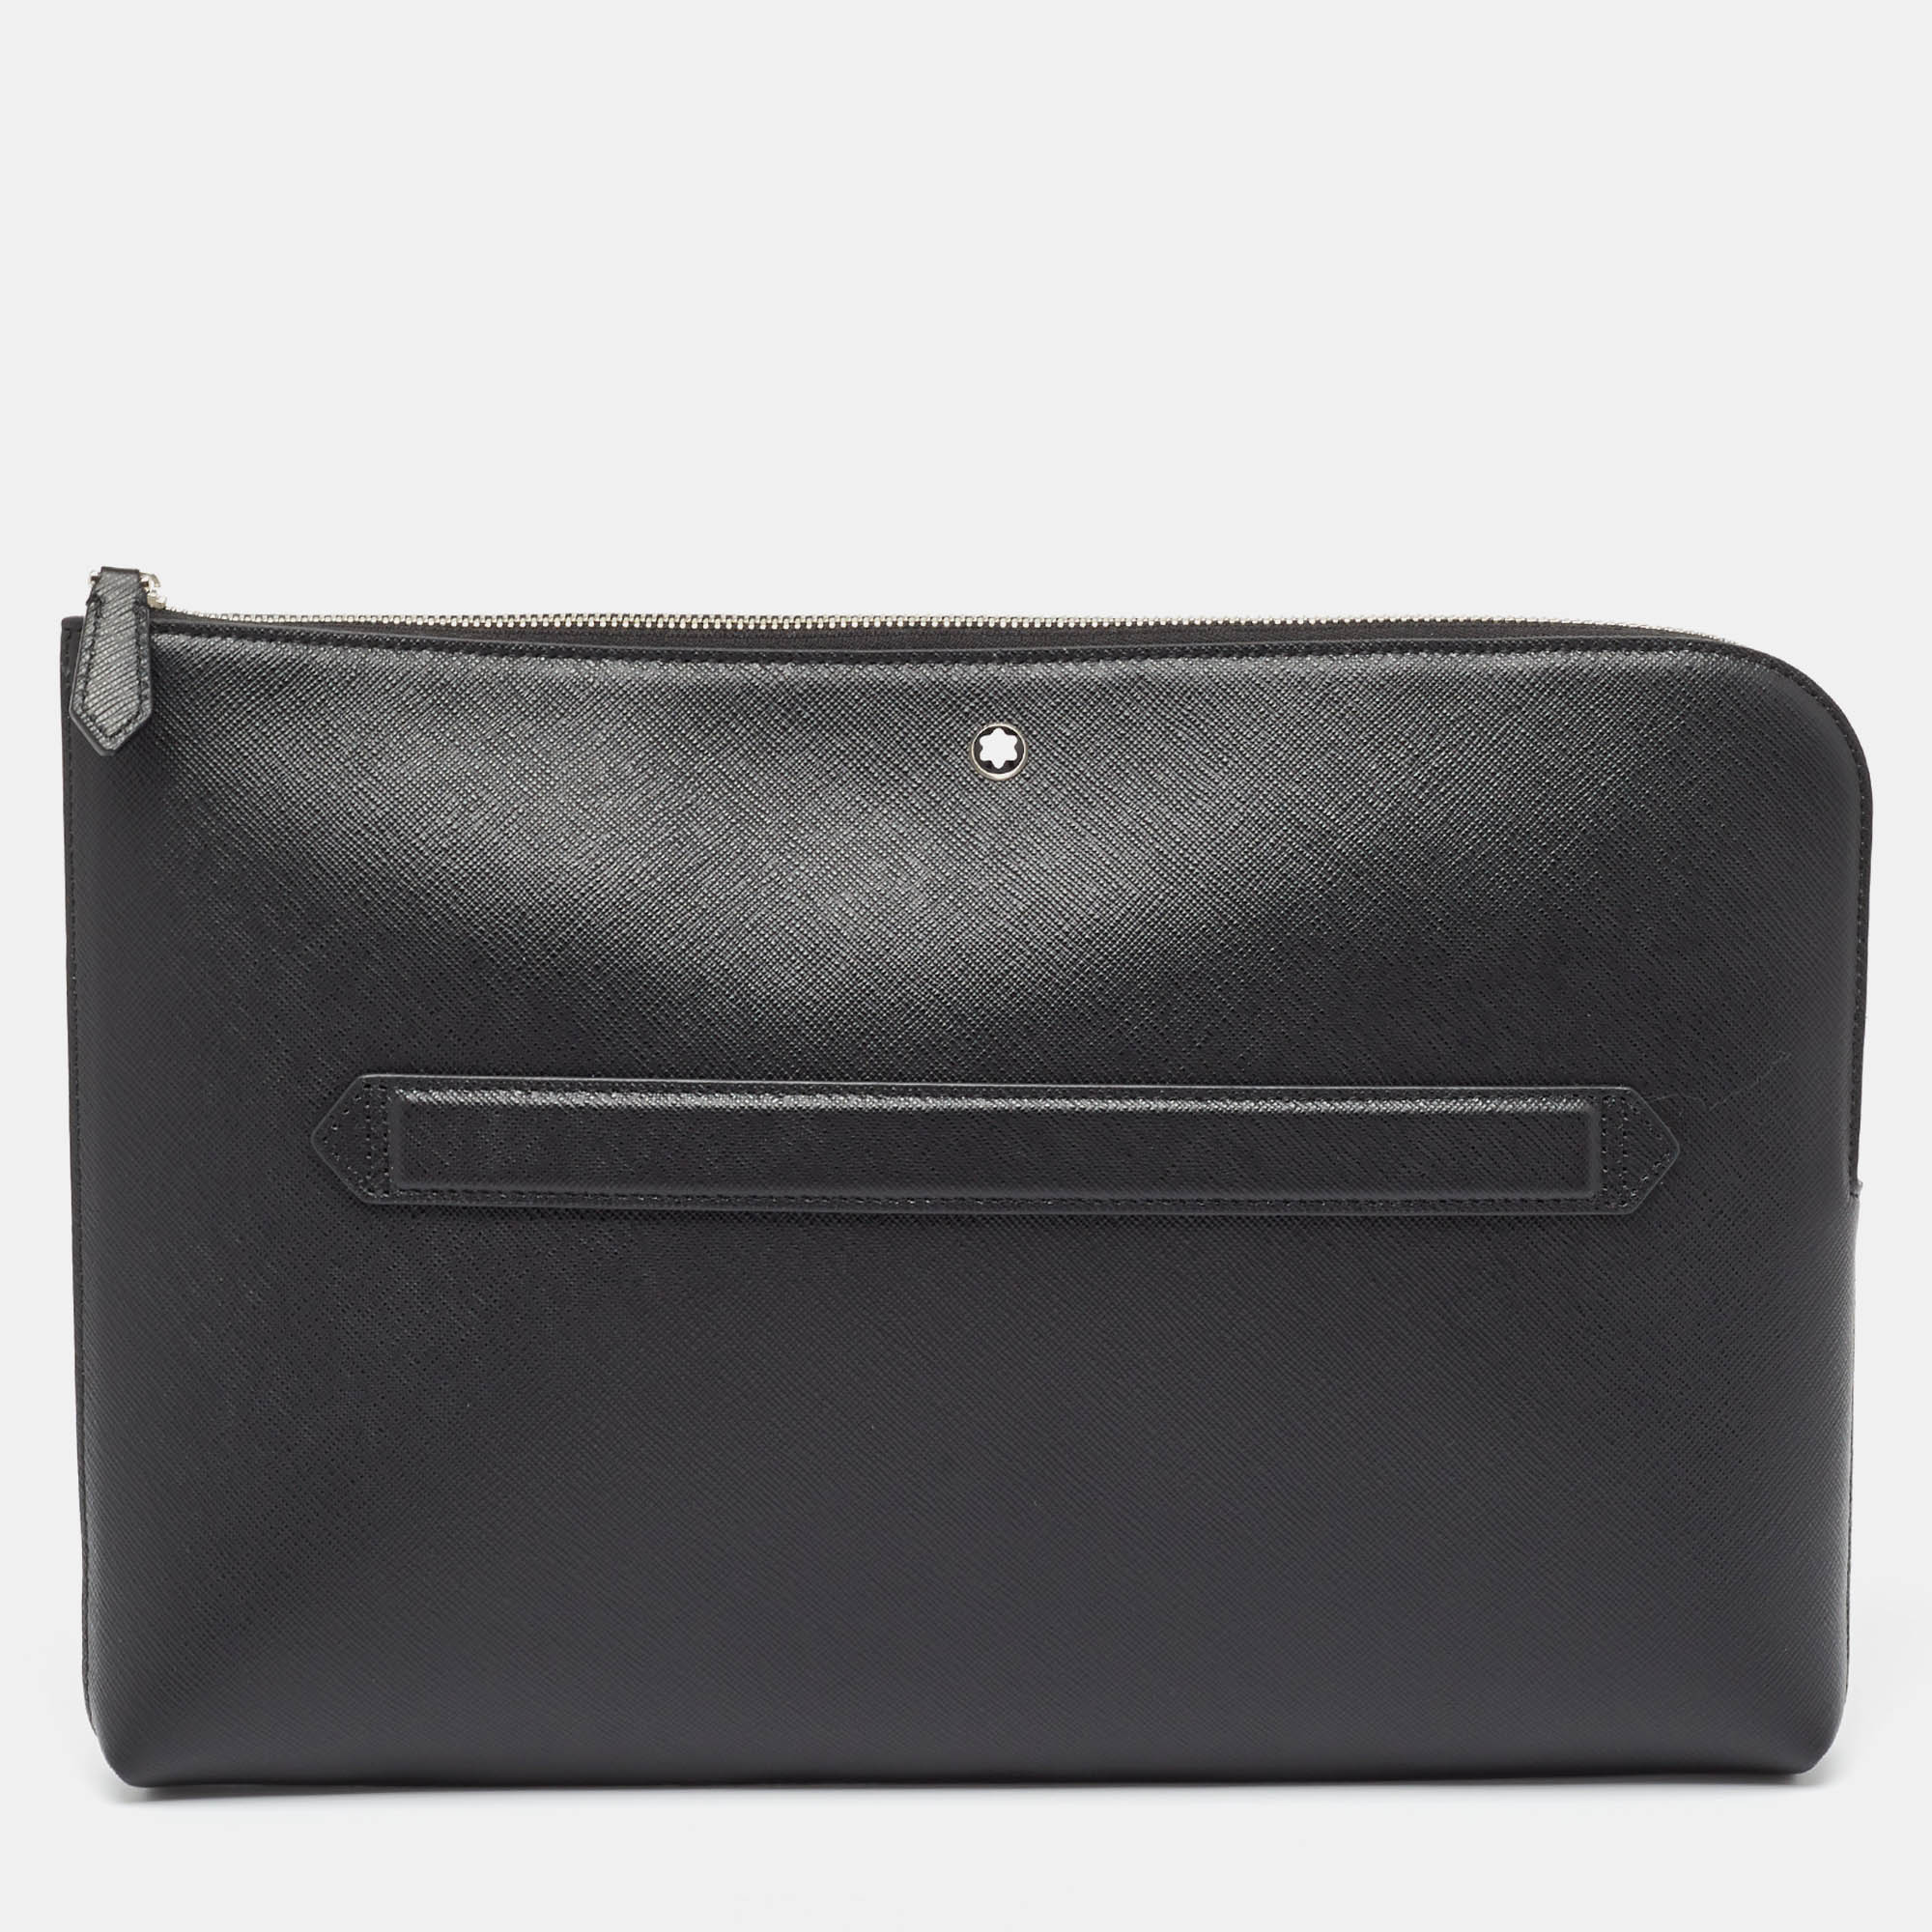 Montblanc black leather meisterstuck zip pouch